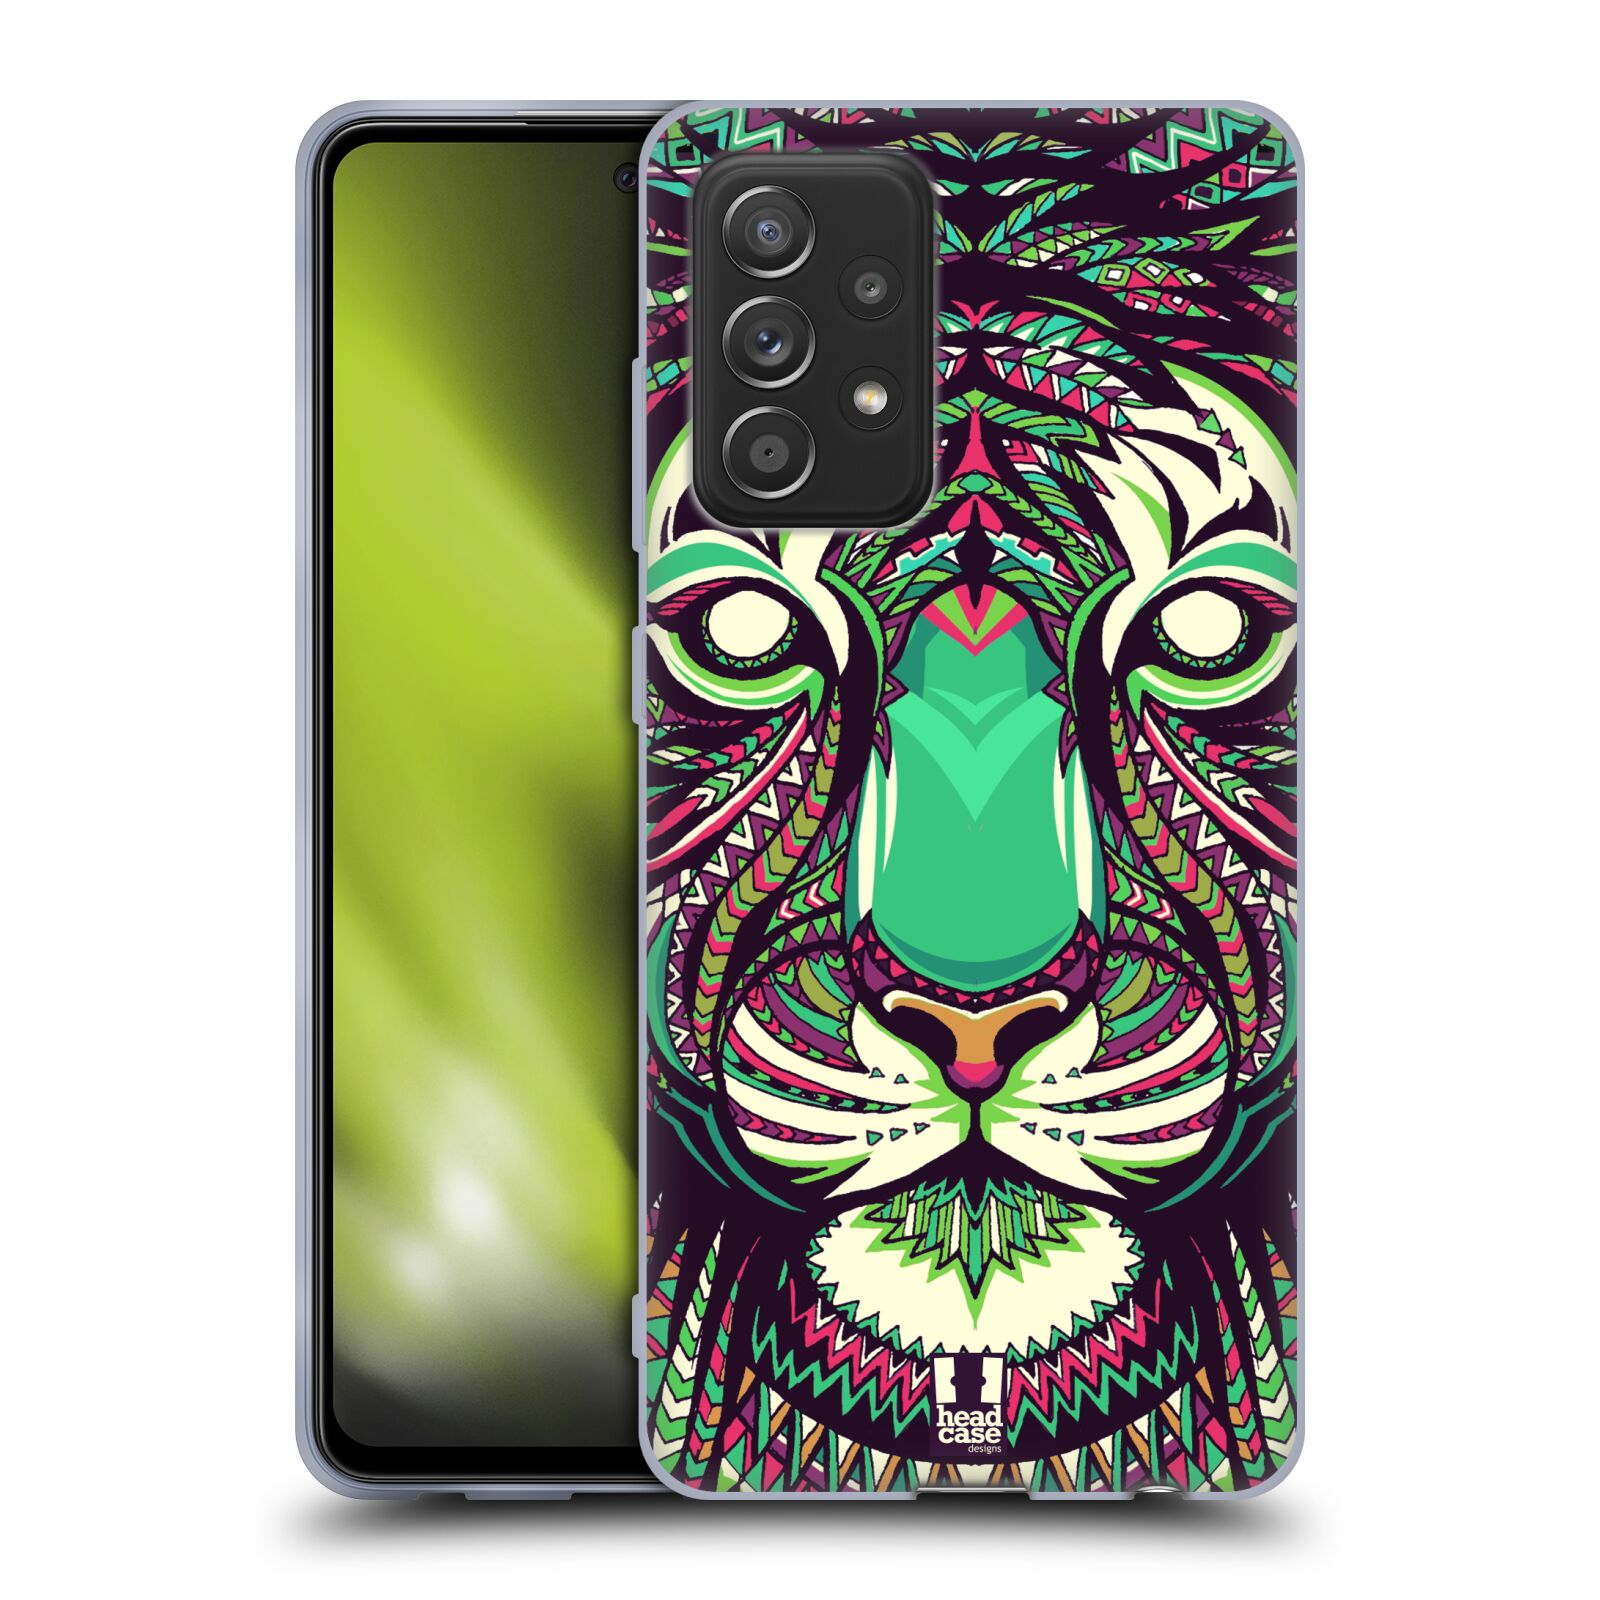 Plastový obal HEAD CASE na mobil Samsung Galaxy A52 / A52 5G / A52s 5G vzor Aztécký motiv zvíře 2 tygr